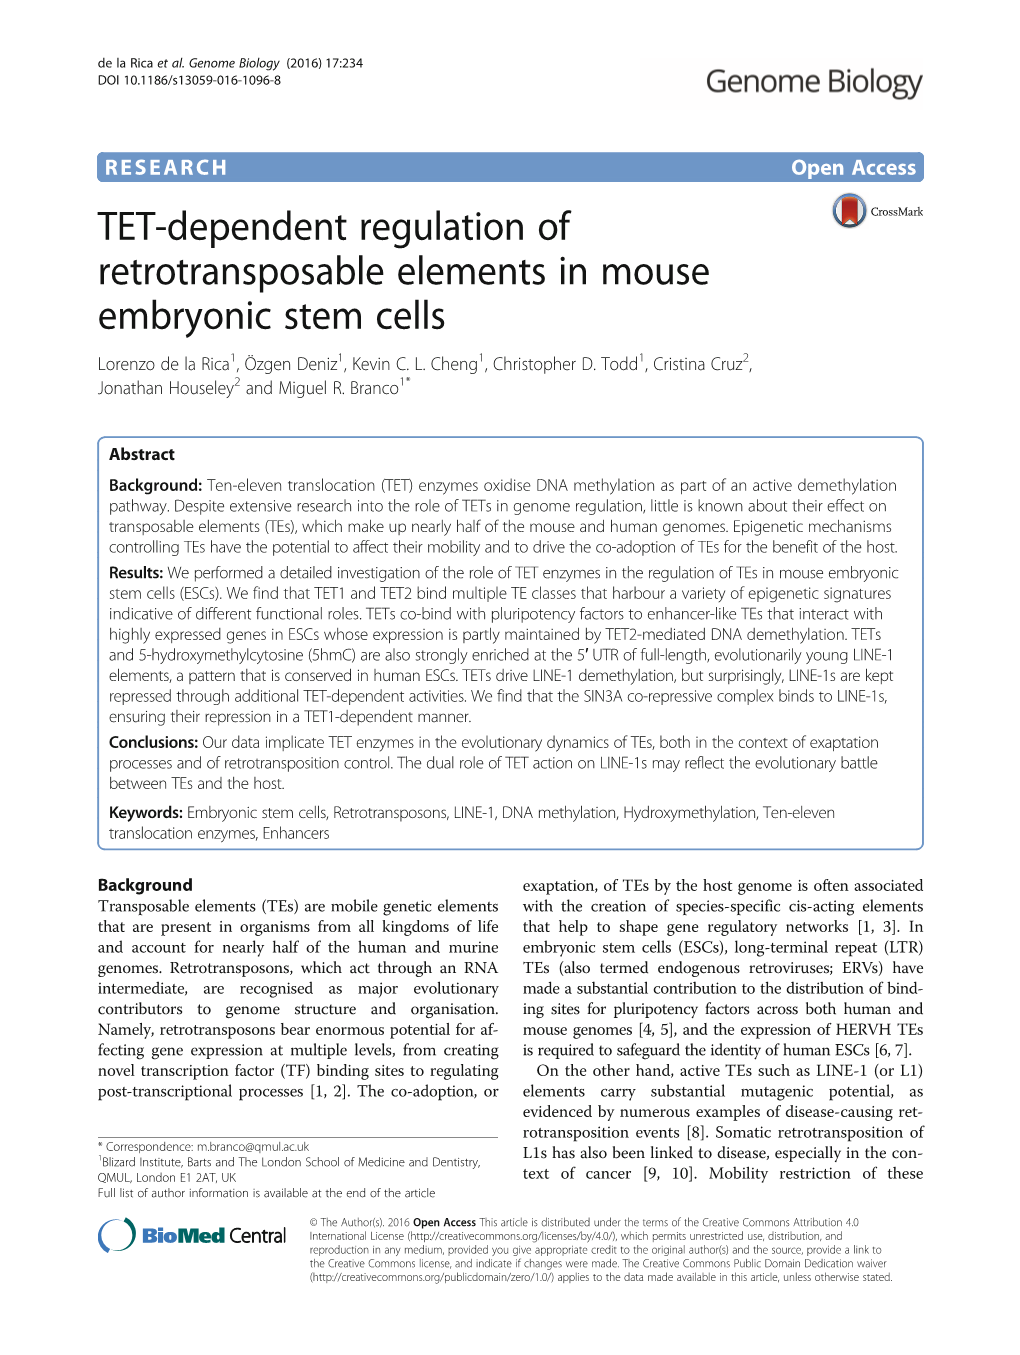 TET-Dependent Regulation of Retrotransposable Elements in Mouse Embryonic Stem Cells Lorenzo De La Rica1, Özgen Deniz1, Kevin C